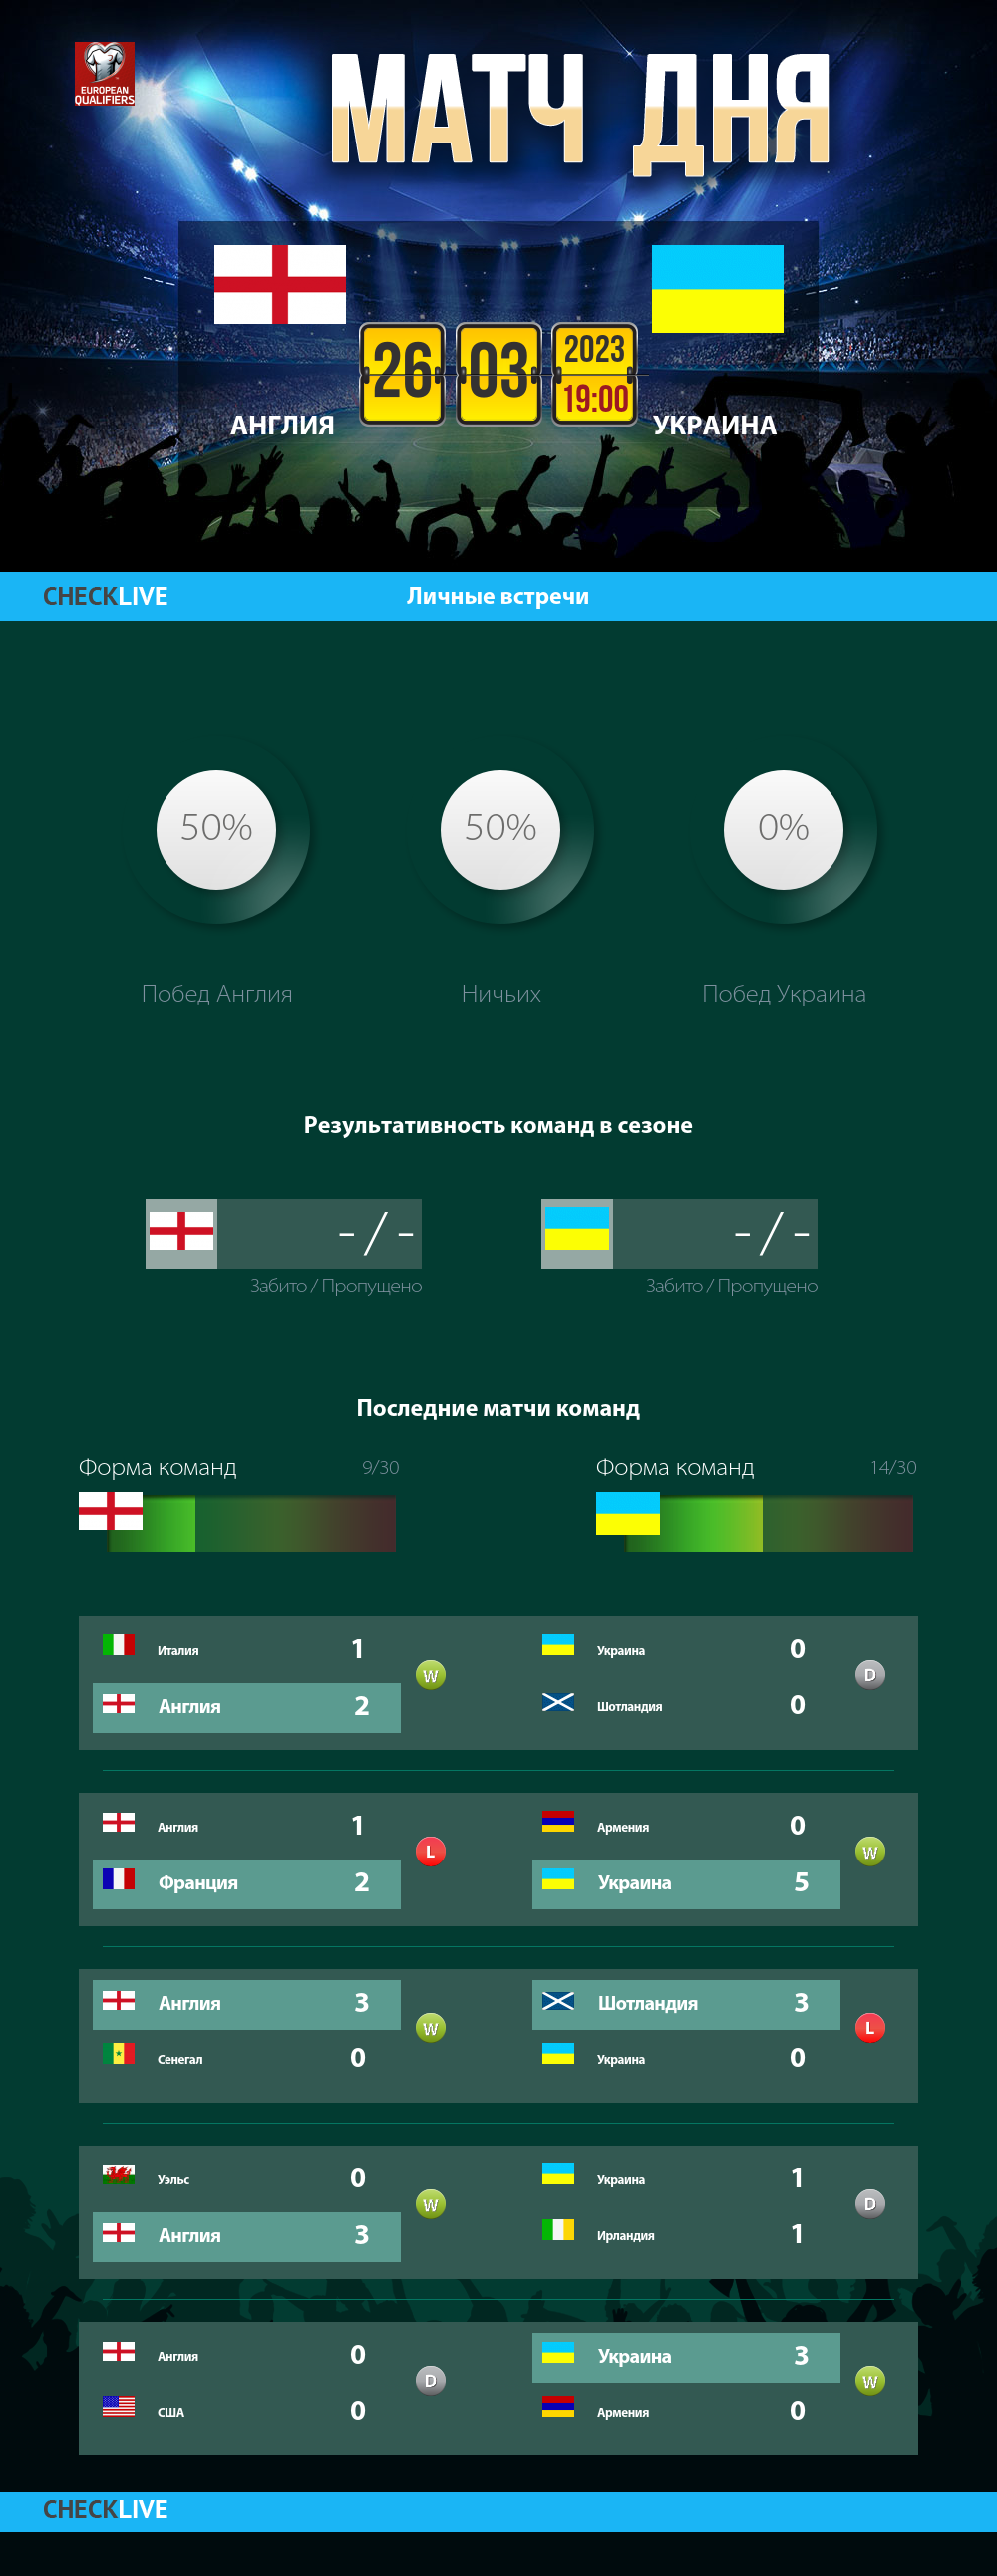 Инфографика Англия и Украина матч дня 26.03.2023